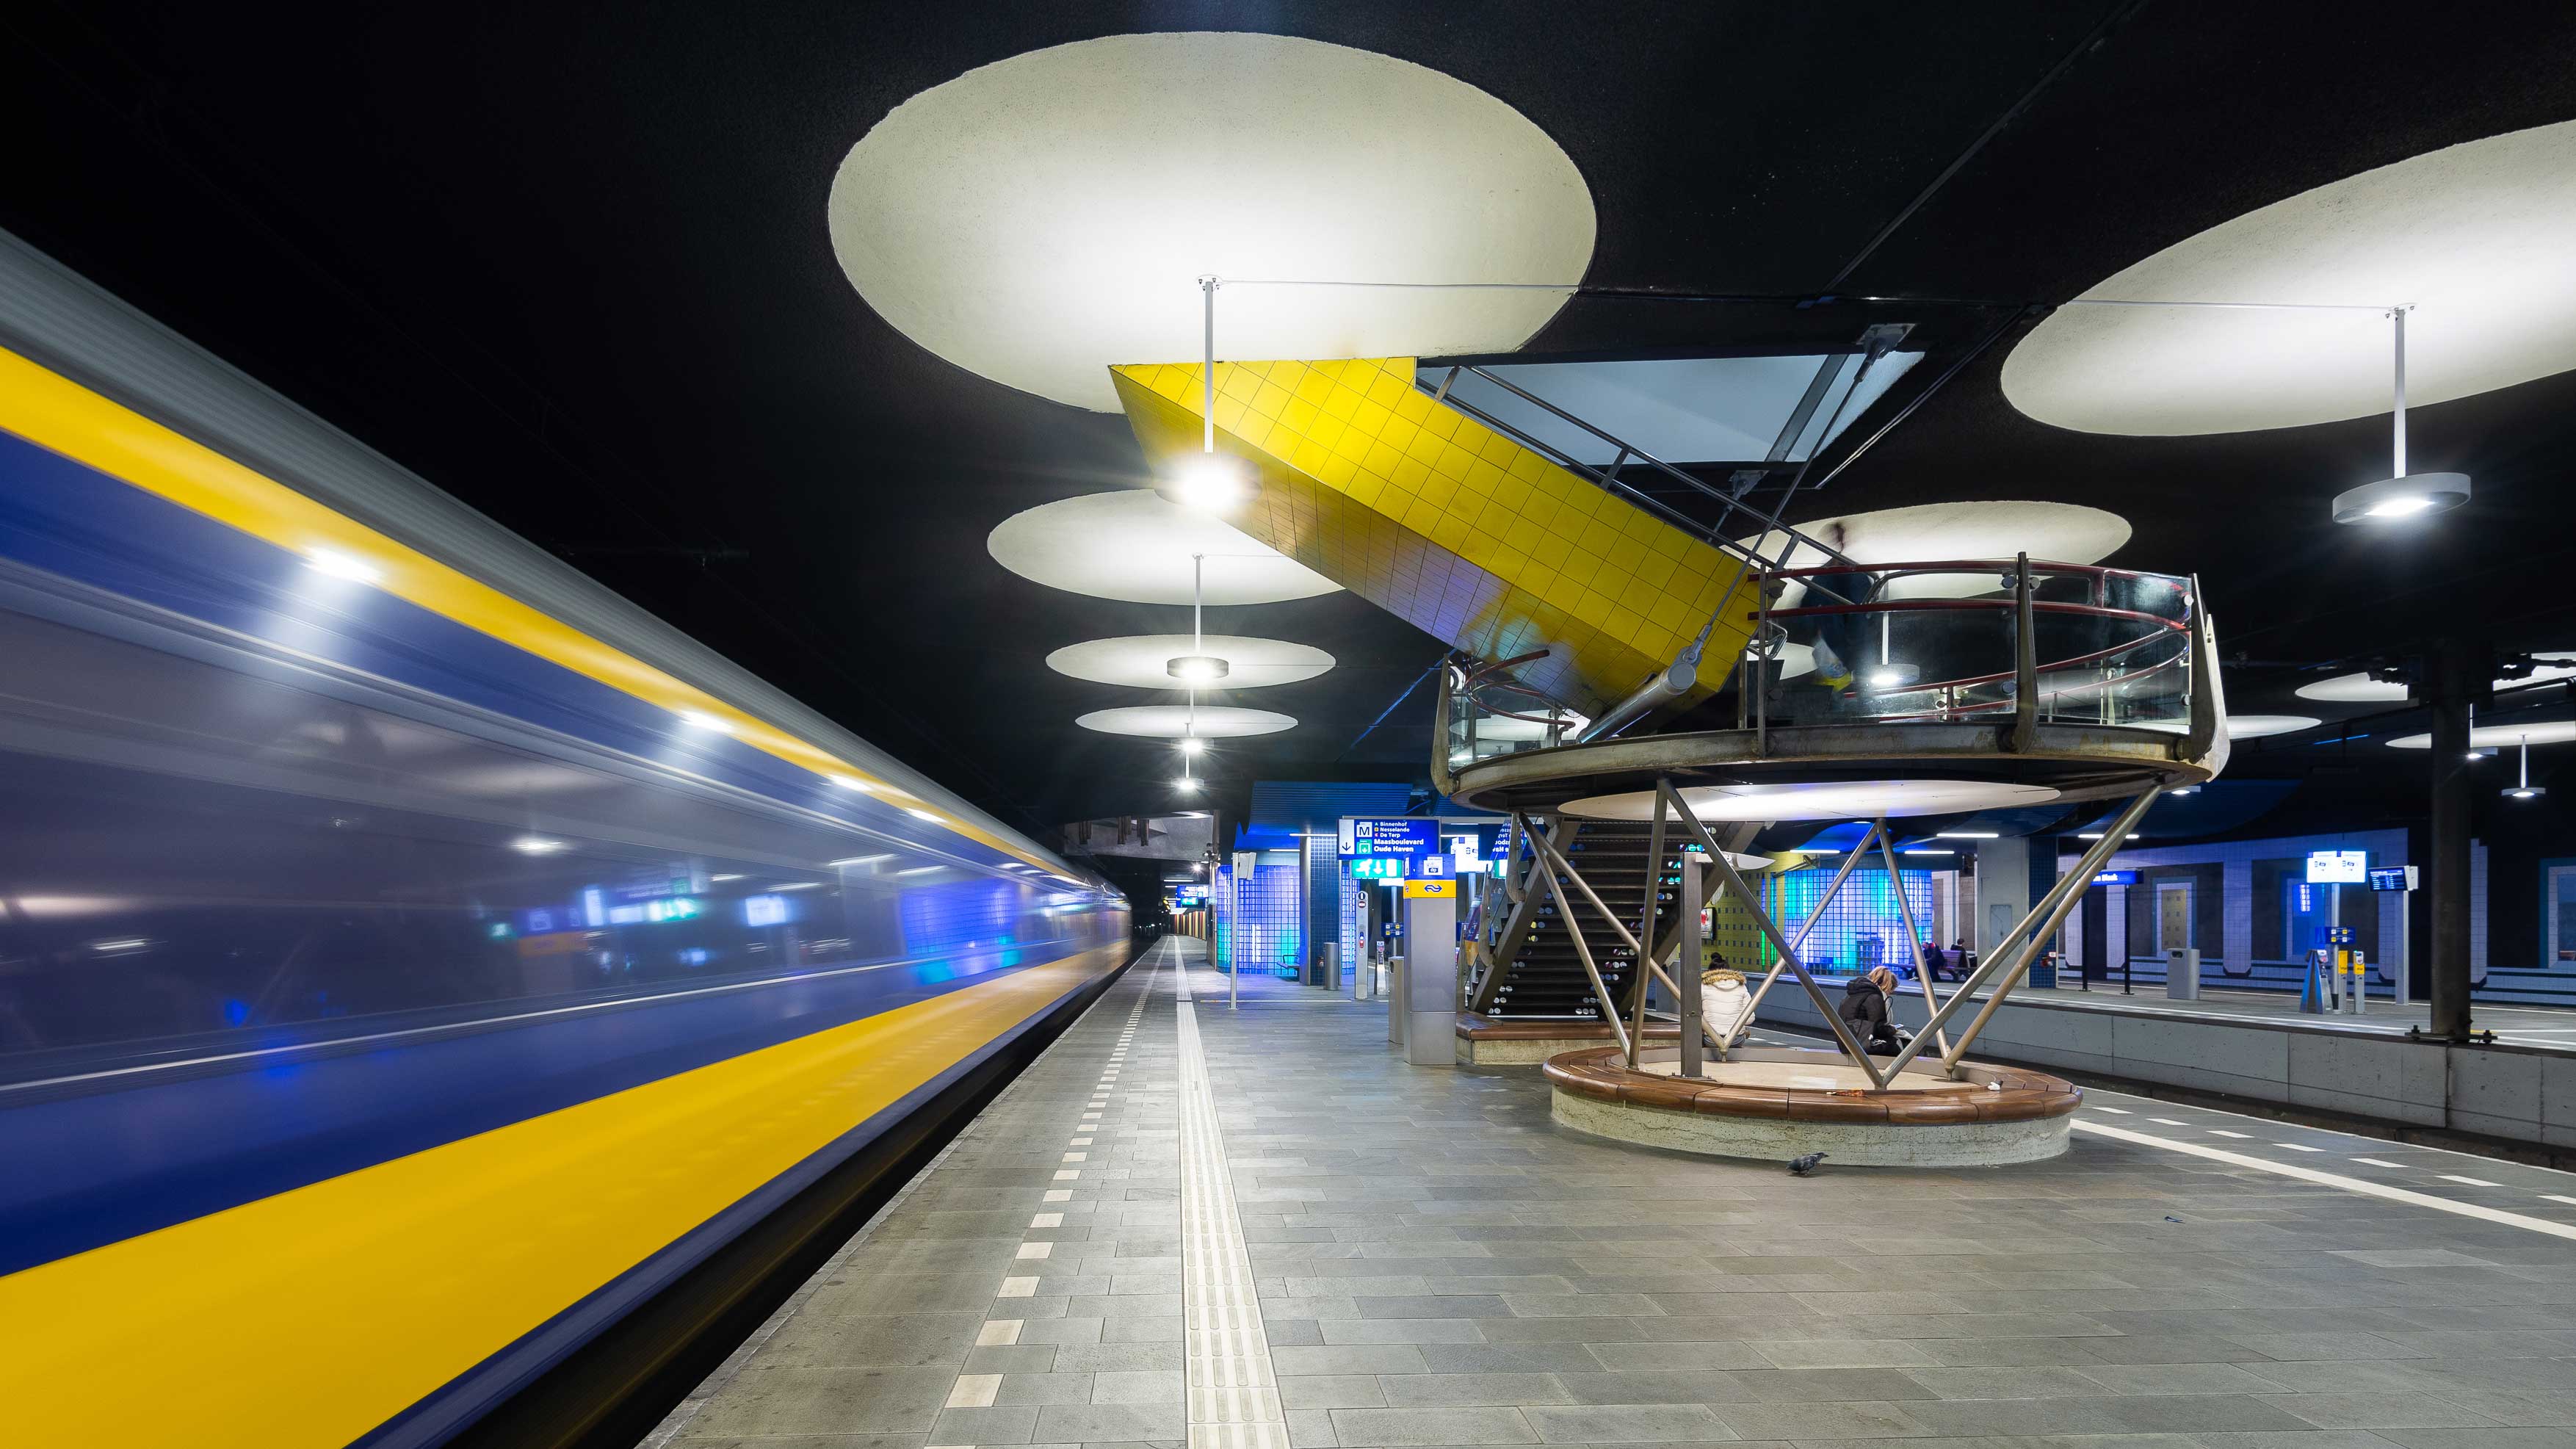 station Rotterdam Blaak